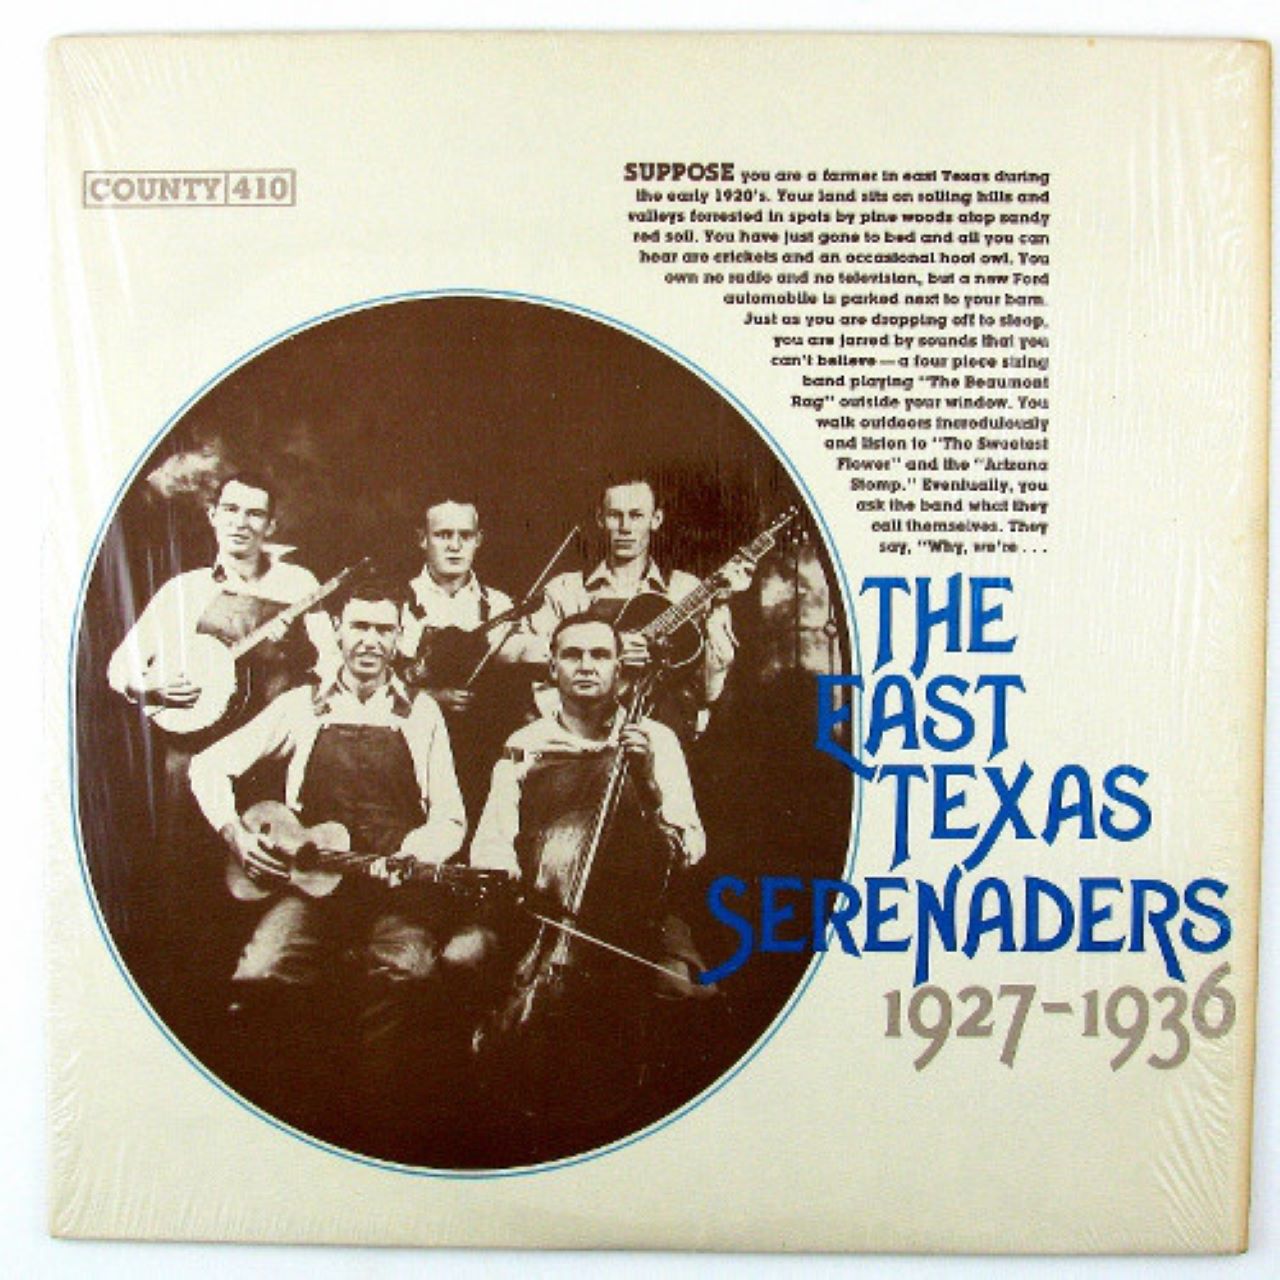 East Texas Serenaders - 1927-1936 cover album